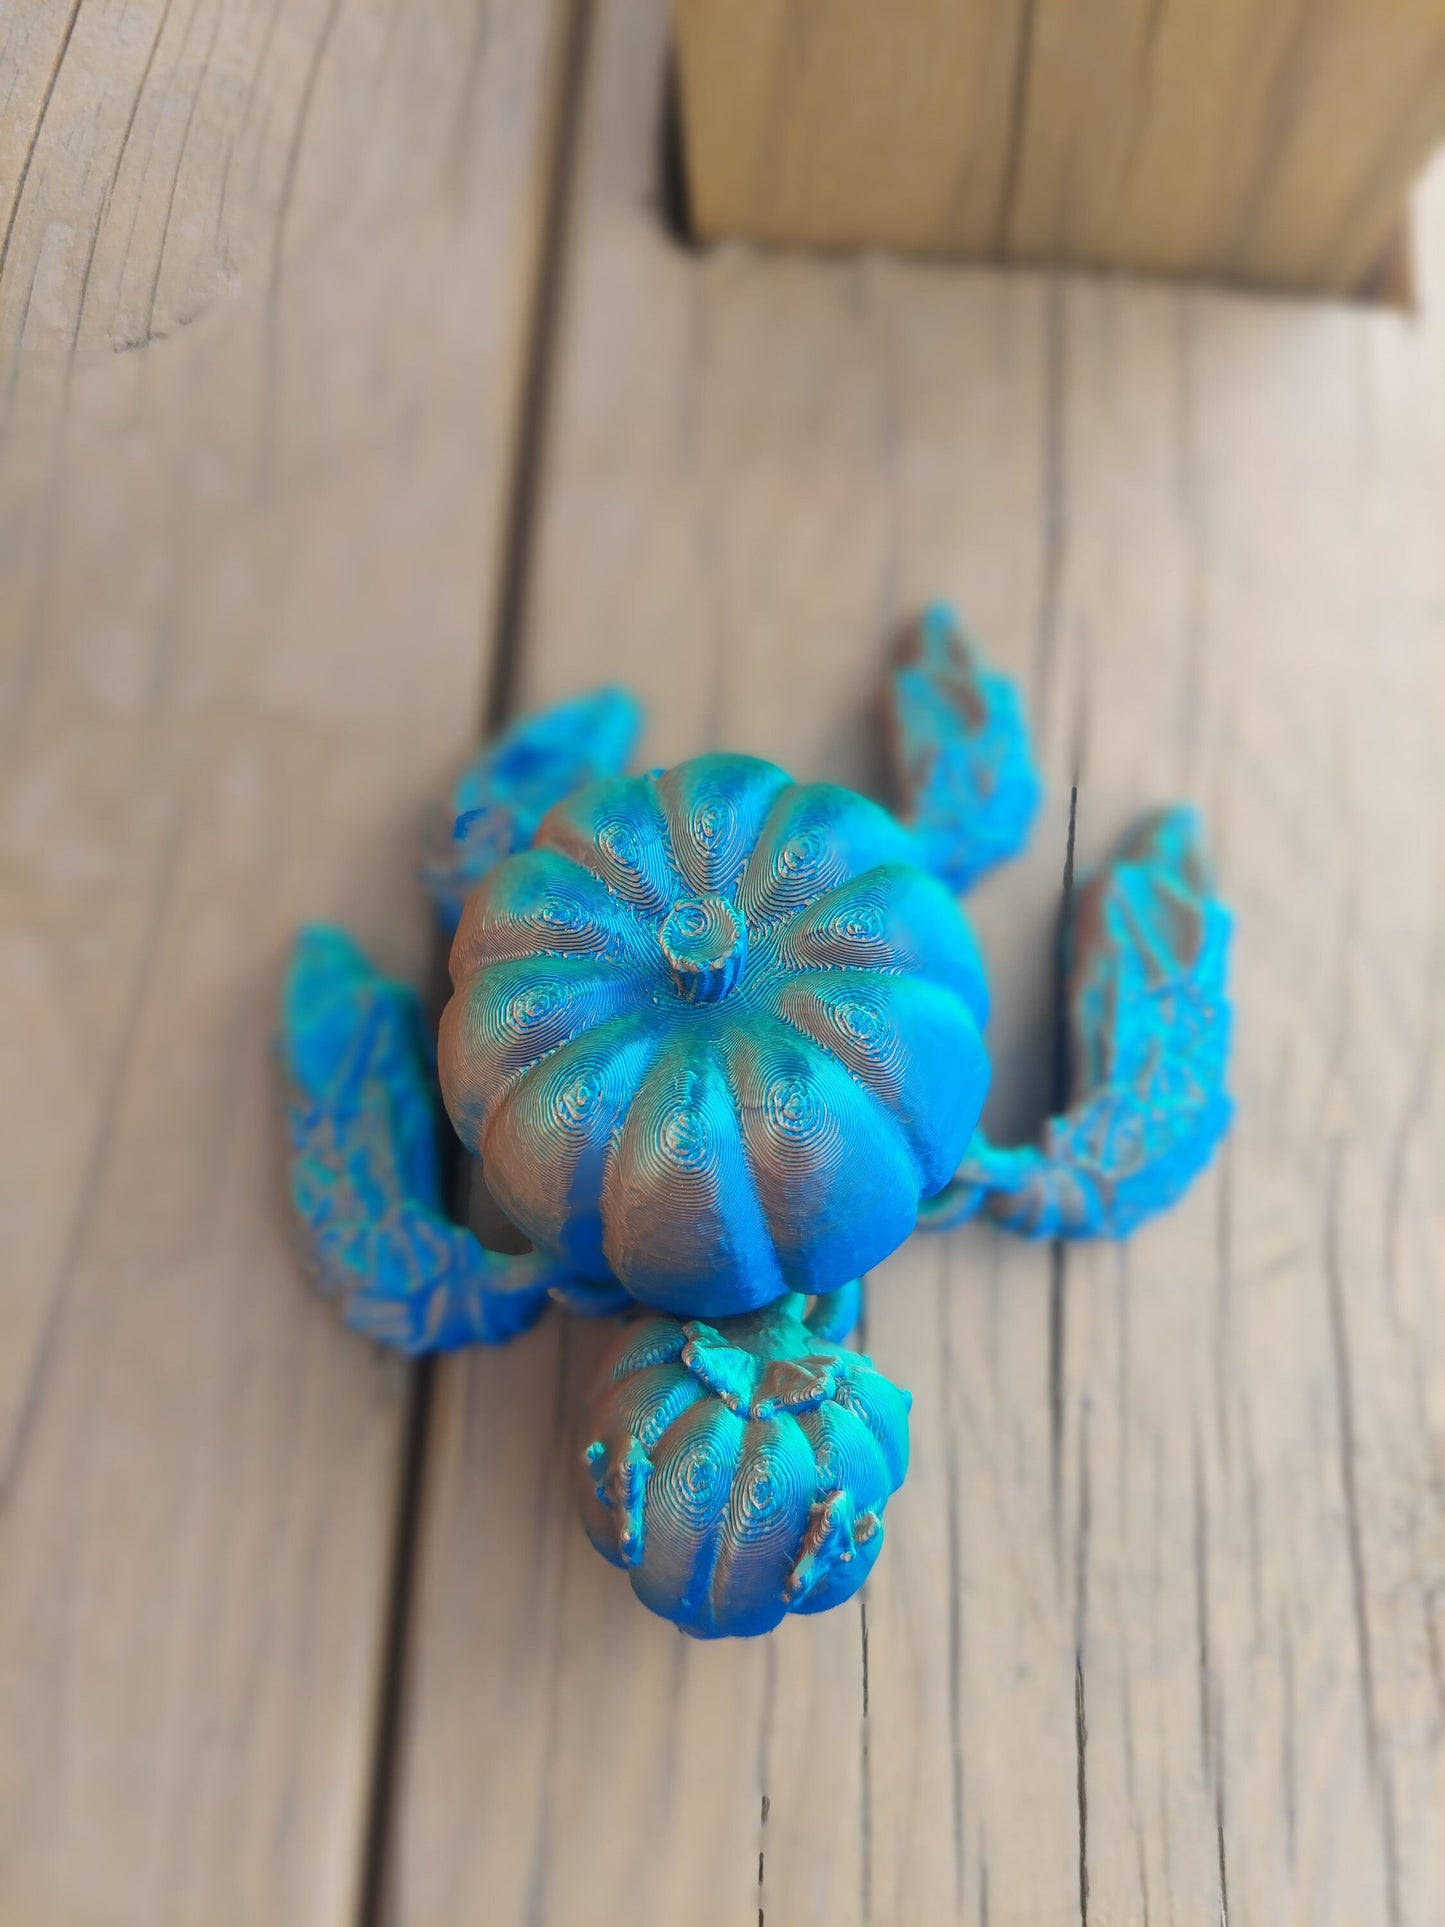 3D-Printed Articulated Pumpkin Turtle Fall Decor Desk Decor Fidget Toy